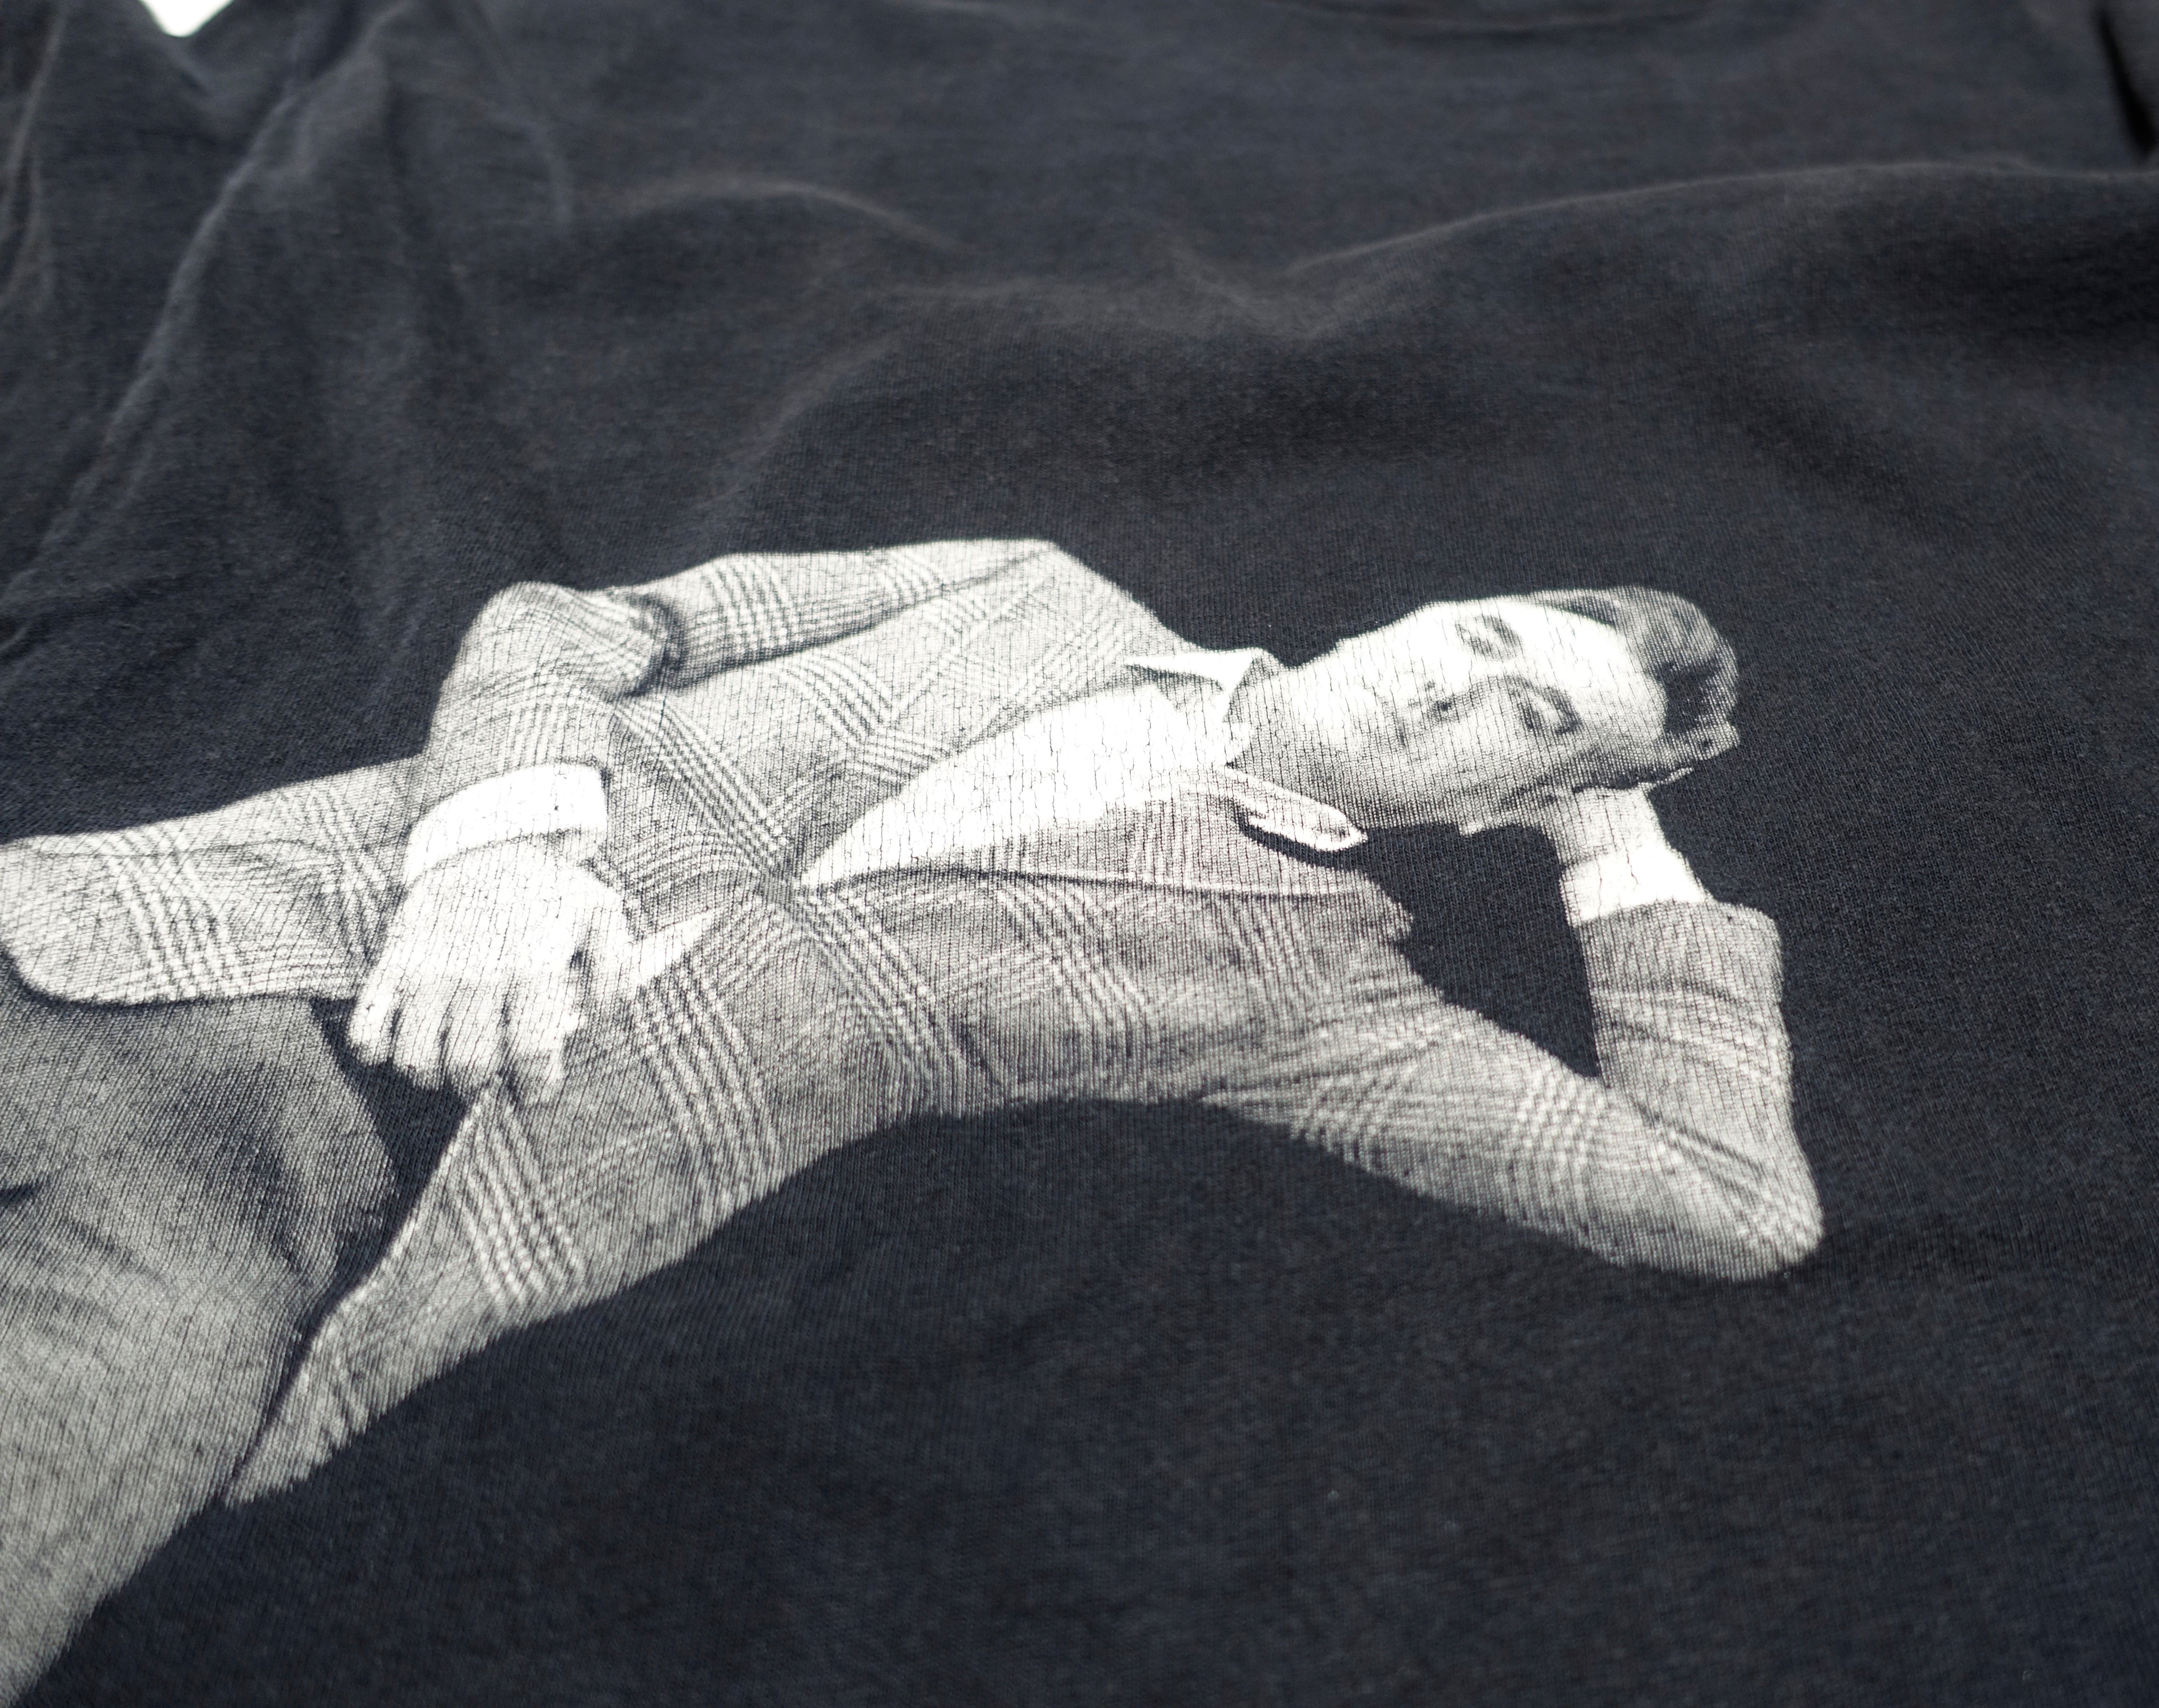 Morrissey - You Have Killed Me Tour Shirt Size XL